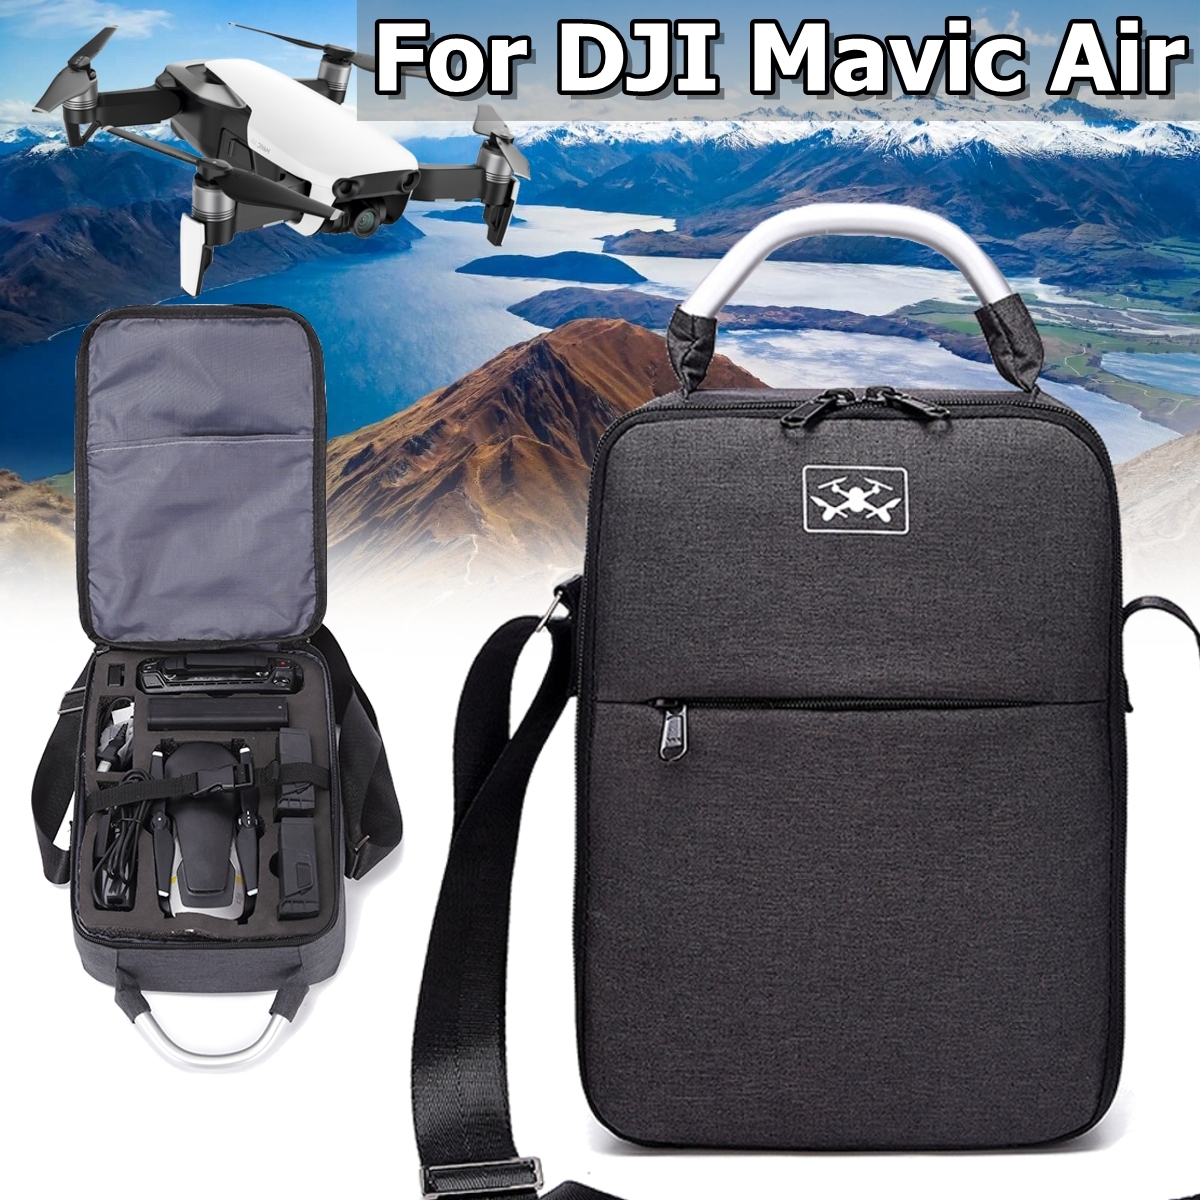 Waterproof Shoulder Bag Backpack Storage Carrying Case Box For DJI Mavic Air Drone